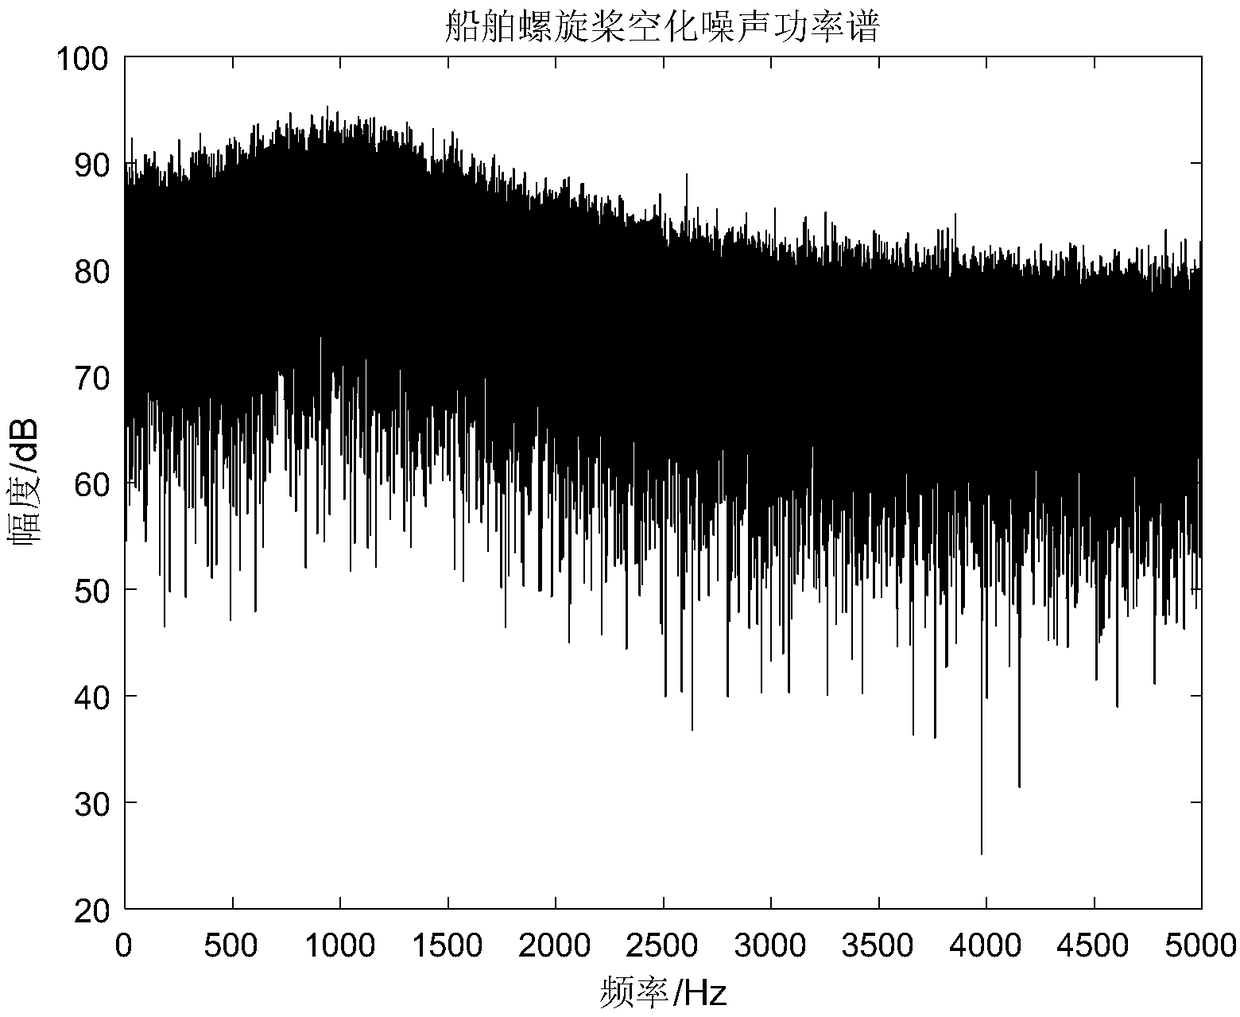 Modulation spectrum characteristic fidelity enhancement method for ship propeller cavitation noise based on adaptive window length